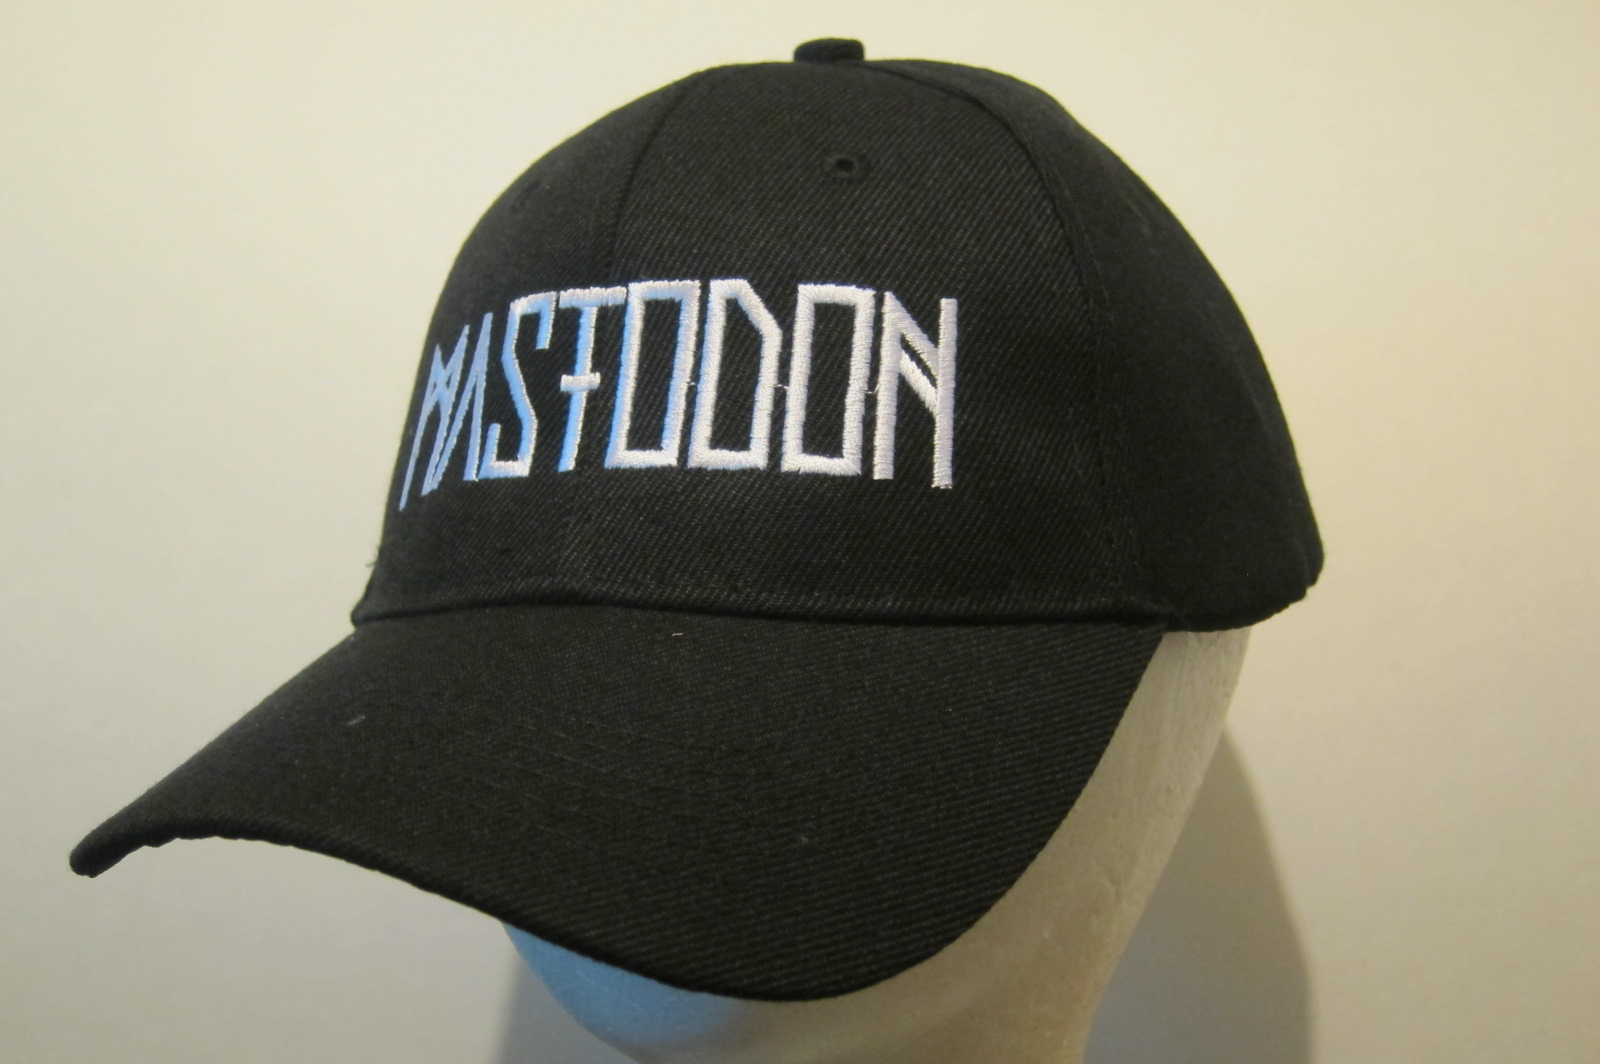 MASTODON - Embroidered - Baseball Cap - Adjustable Velcro Back - One Size Fits All UNISEX